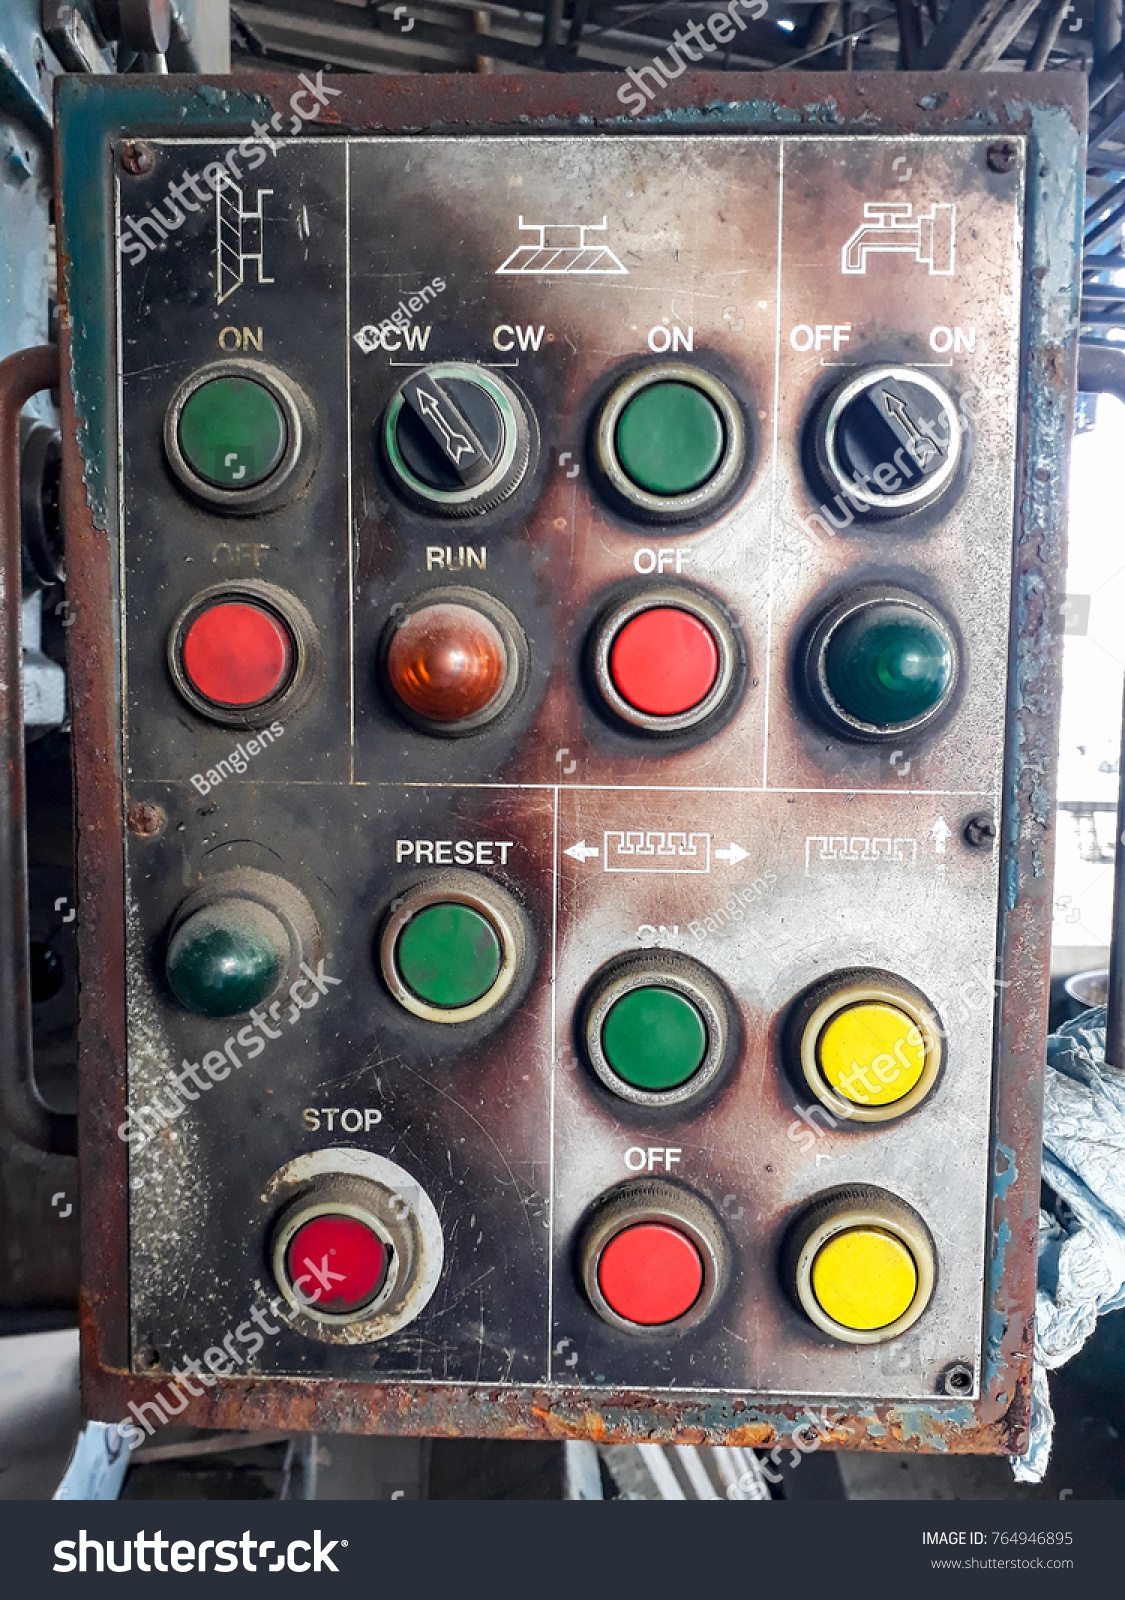 Marx 100-1M Control Panel Push Button